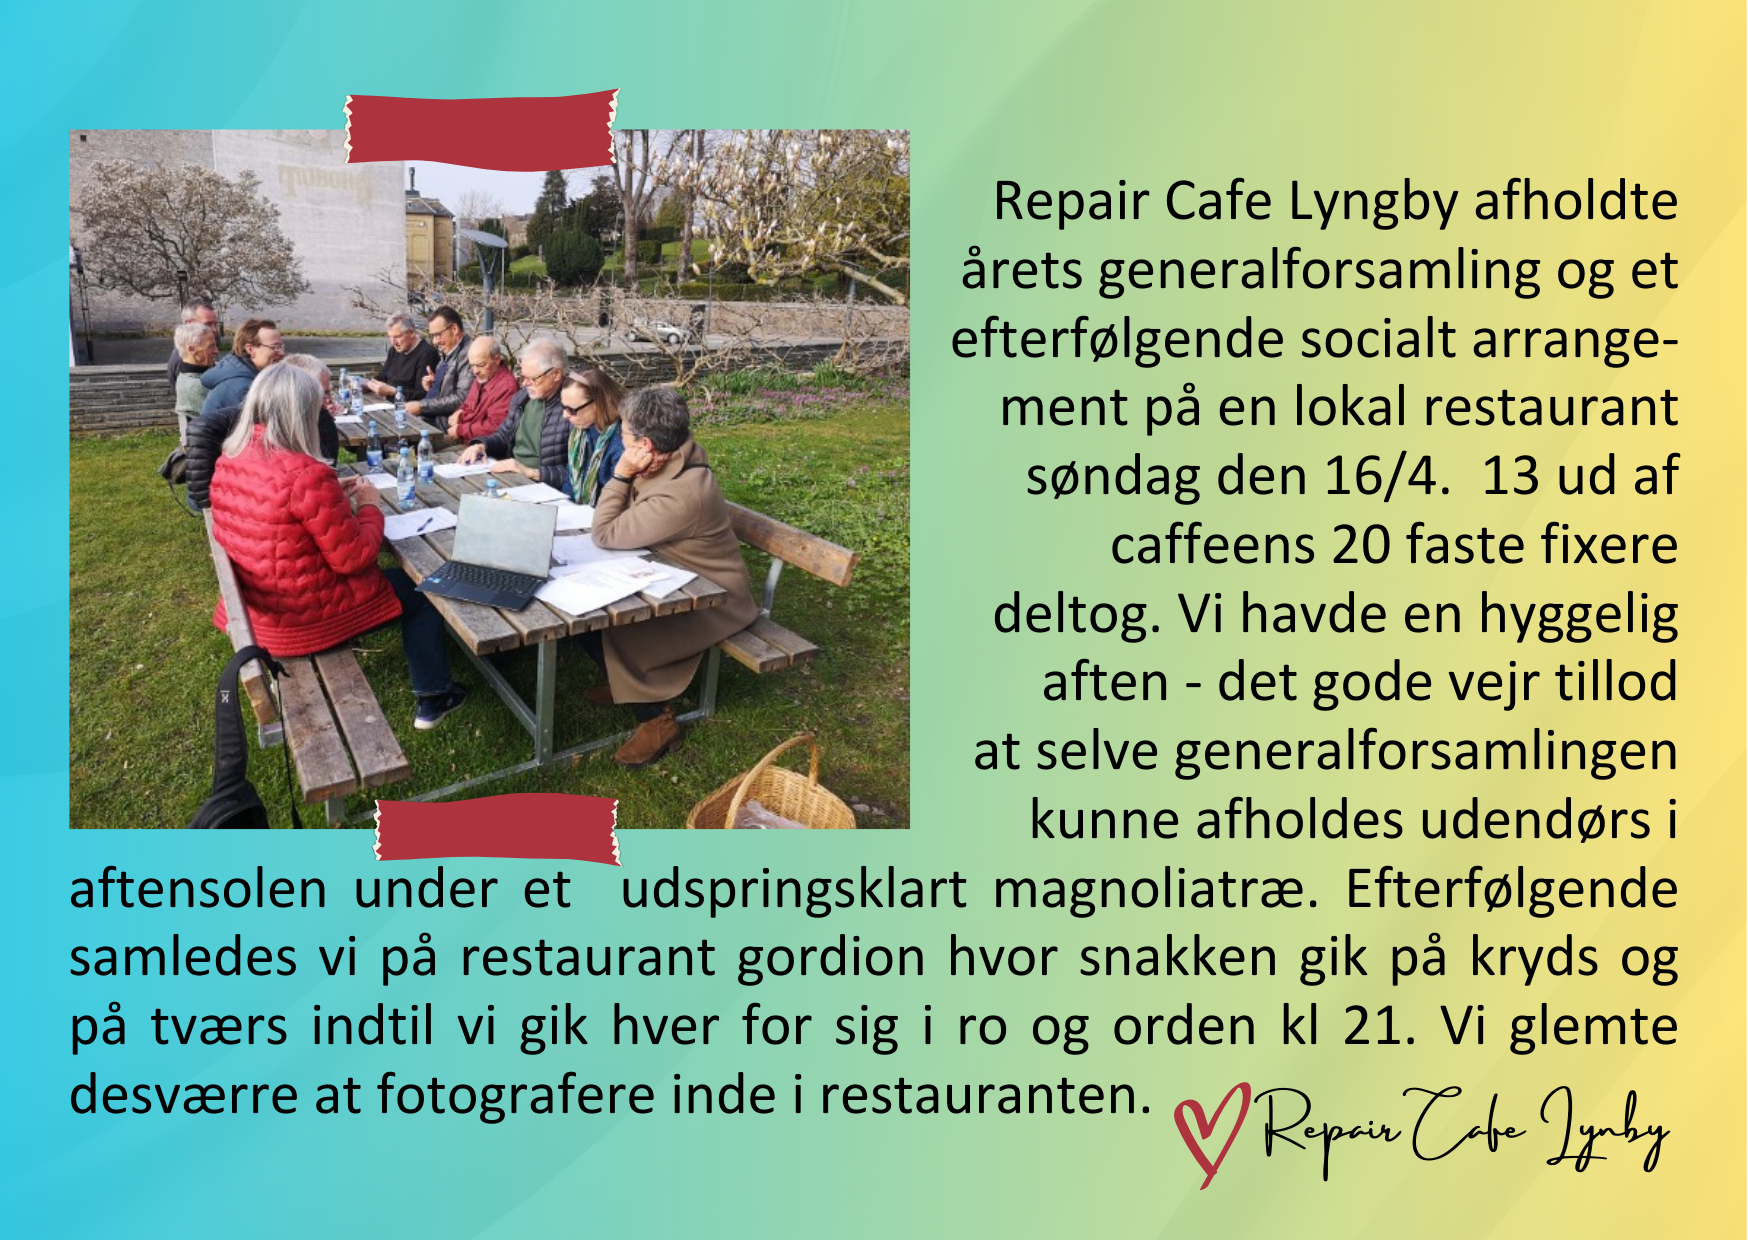 Postkort fra Repair Cafe Lyngby